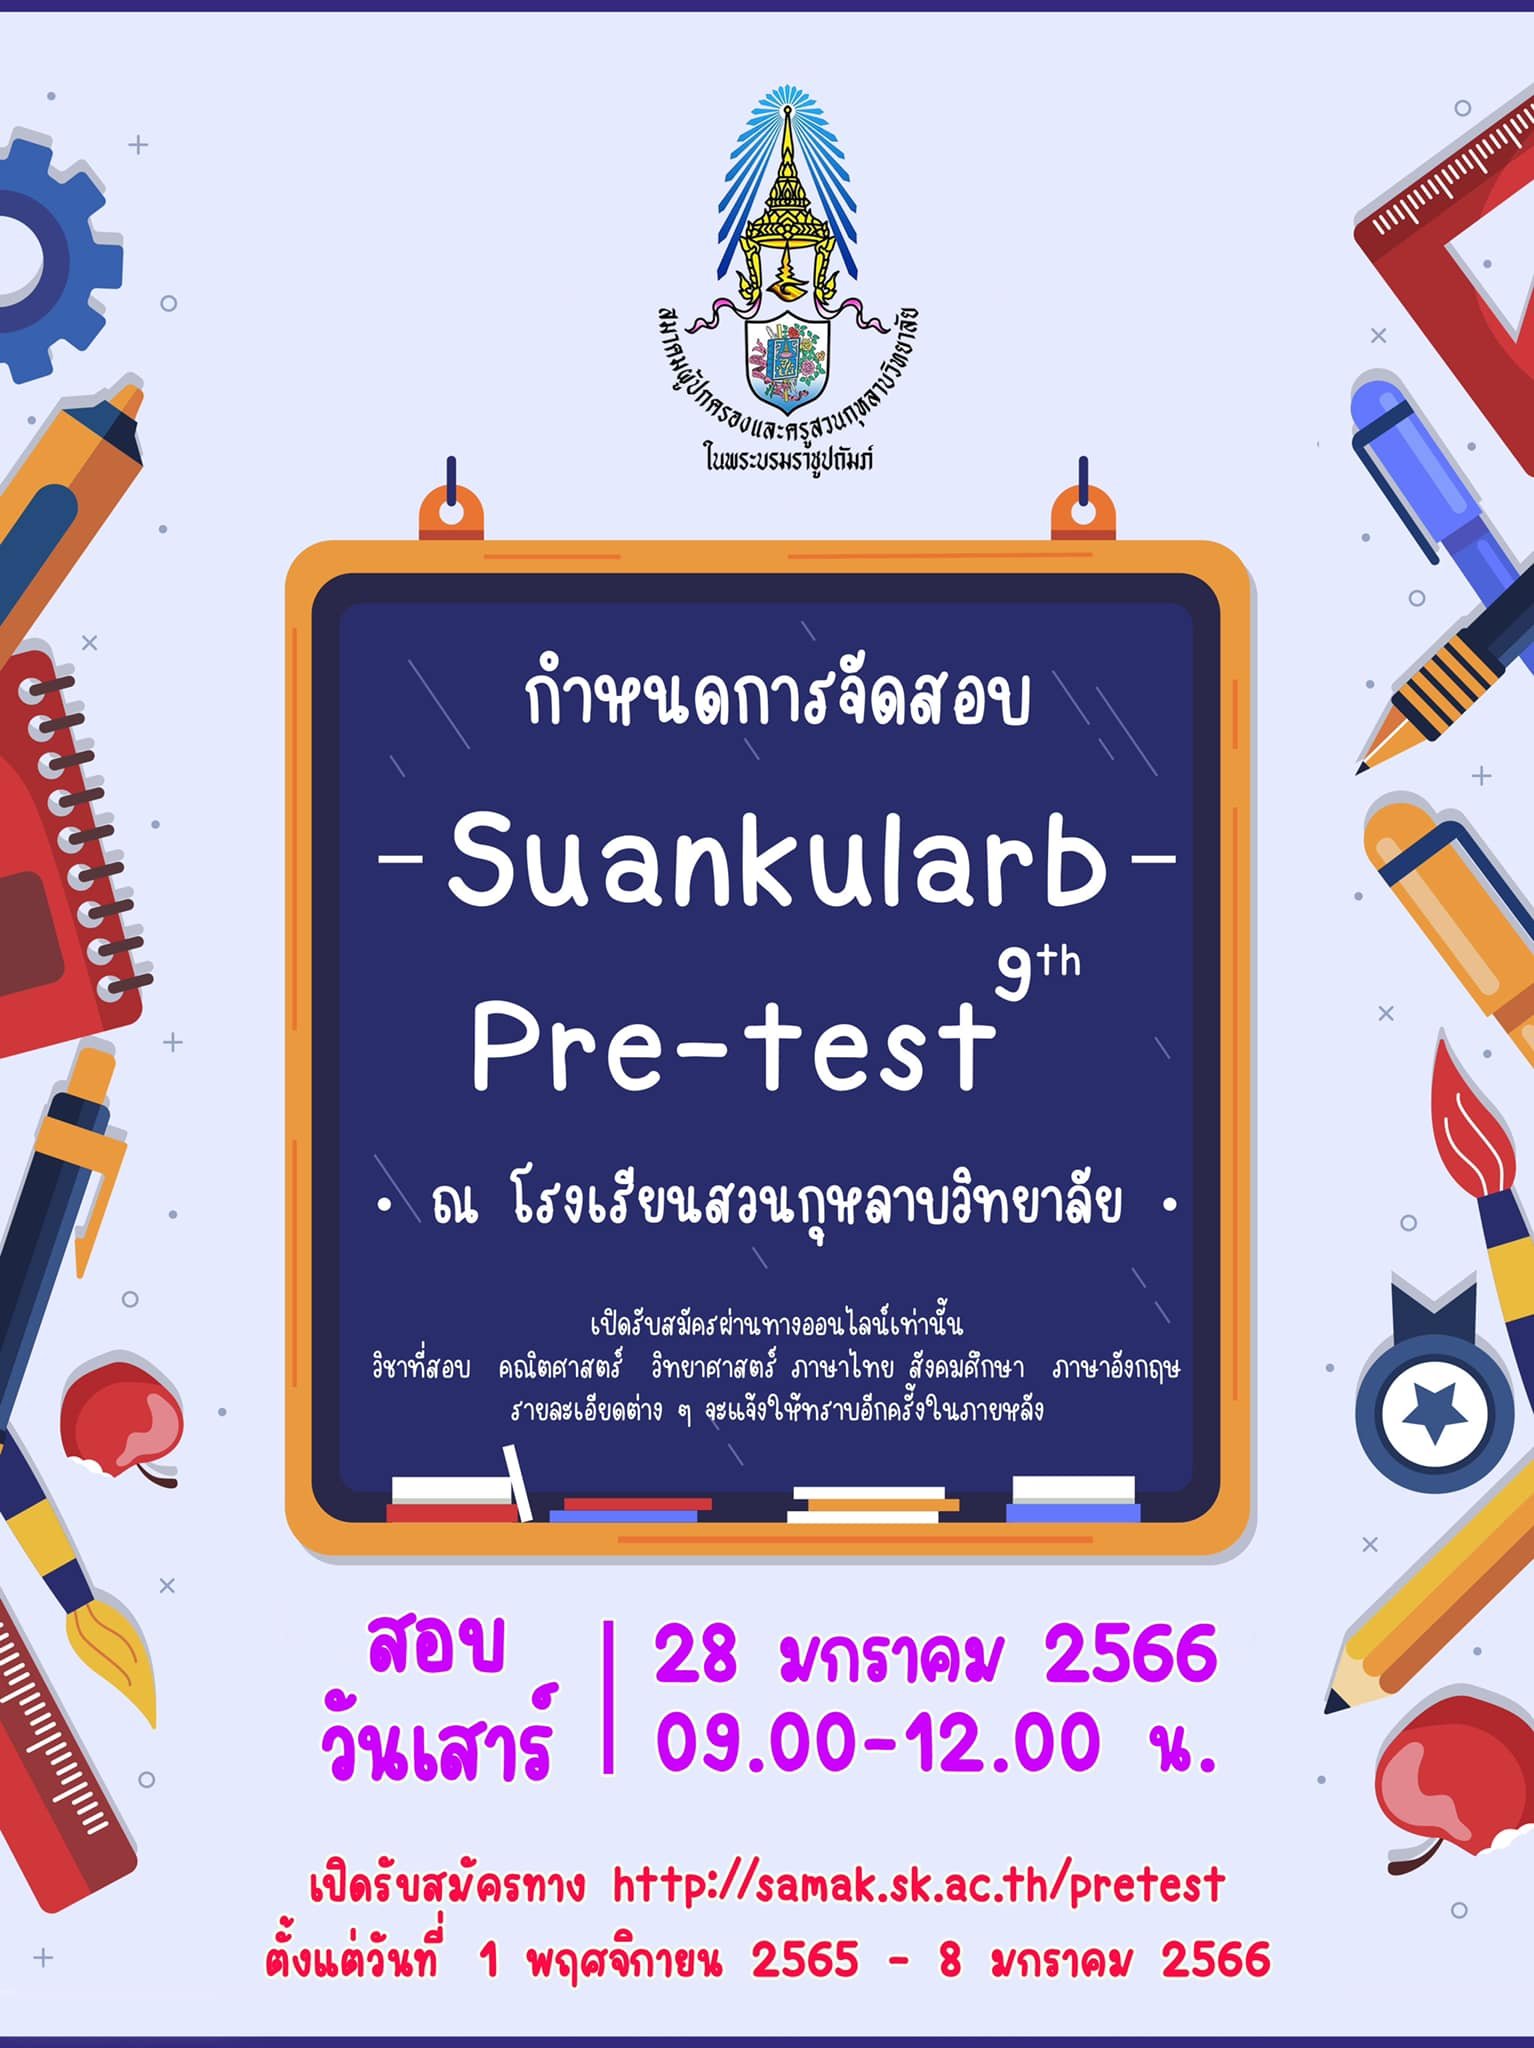 Suankularb Pre-test ครั้งที่ 9 พรีเทสสอบเข้า ม.1 โรงเรียนสวนกุหลาบวิทยาลัย